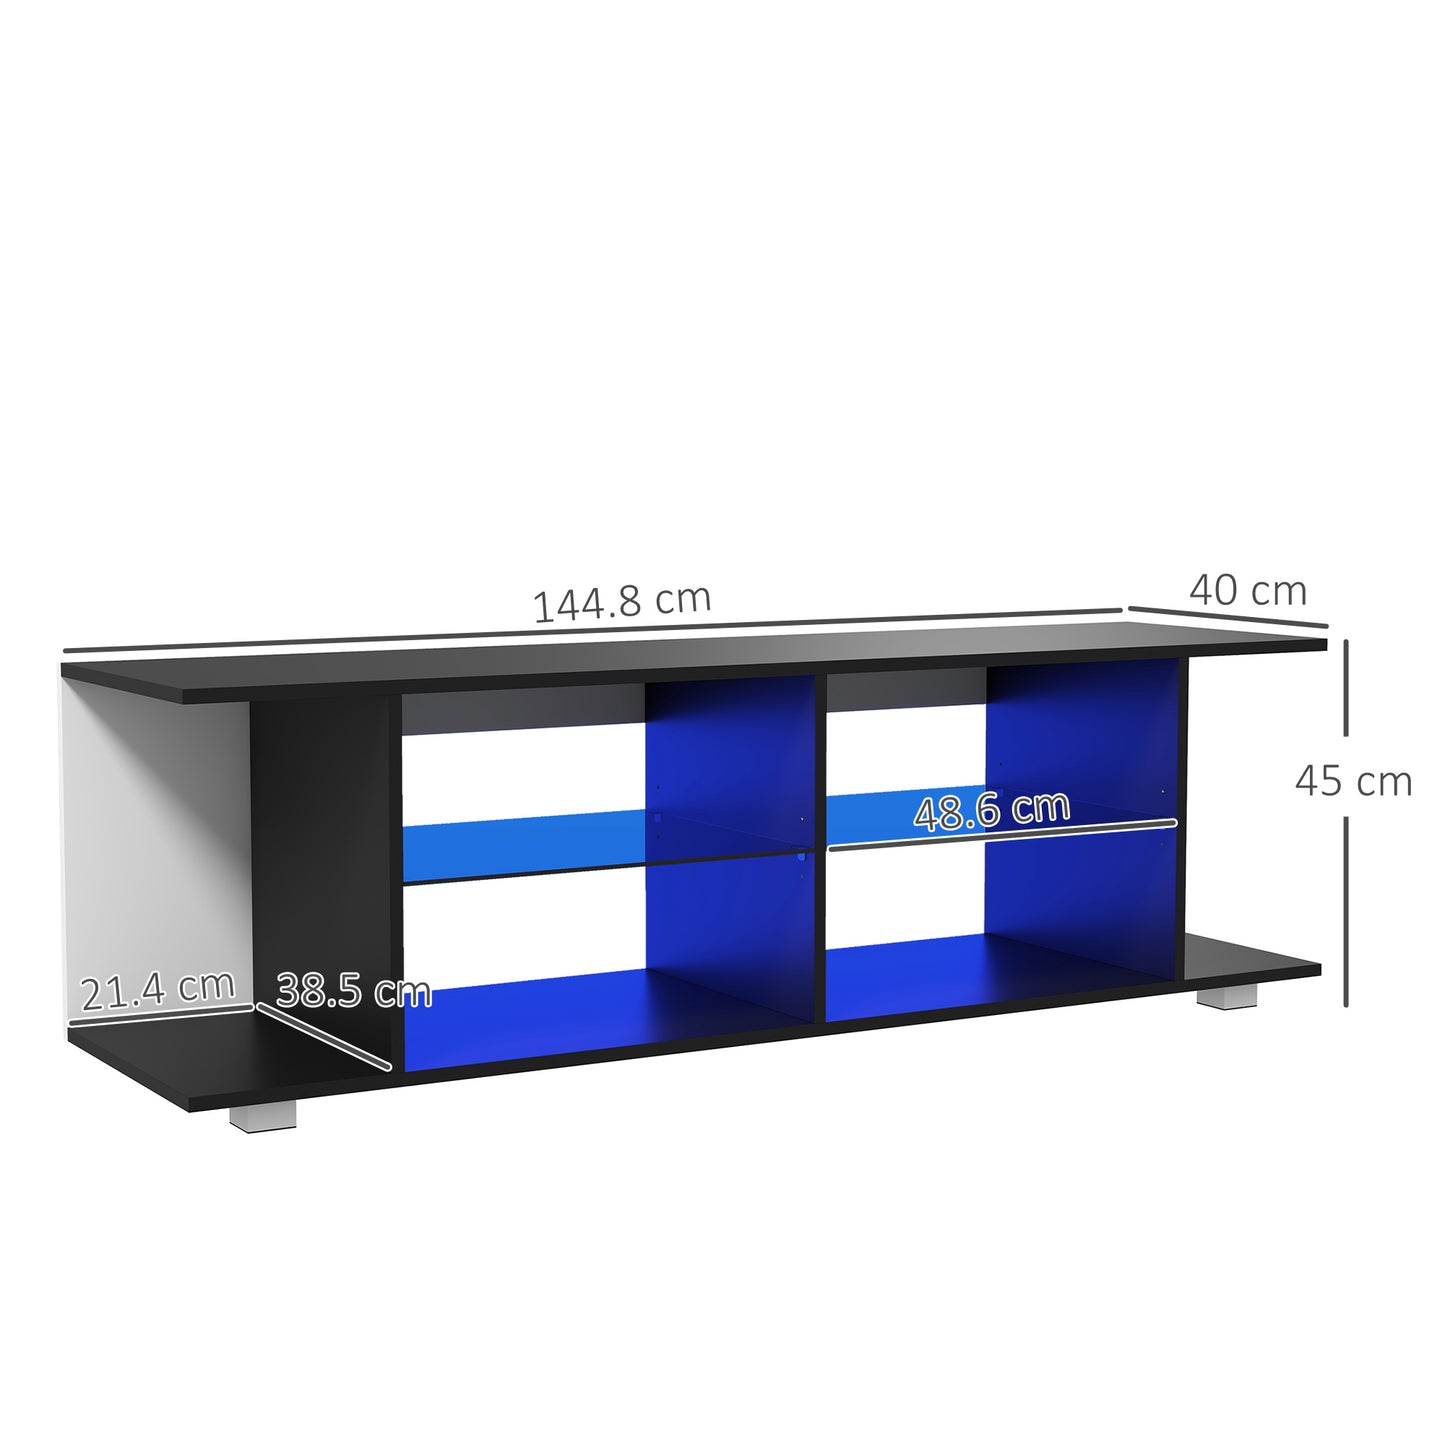 HOMCOM TV Stand 145cm Modern TV Unit with Glass Shelves RGB LED Light for 32 - 60 inch 4k TV Black